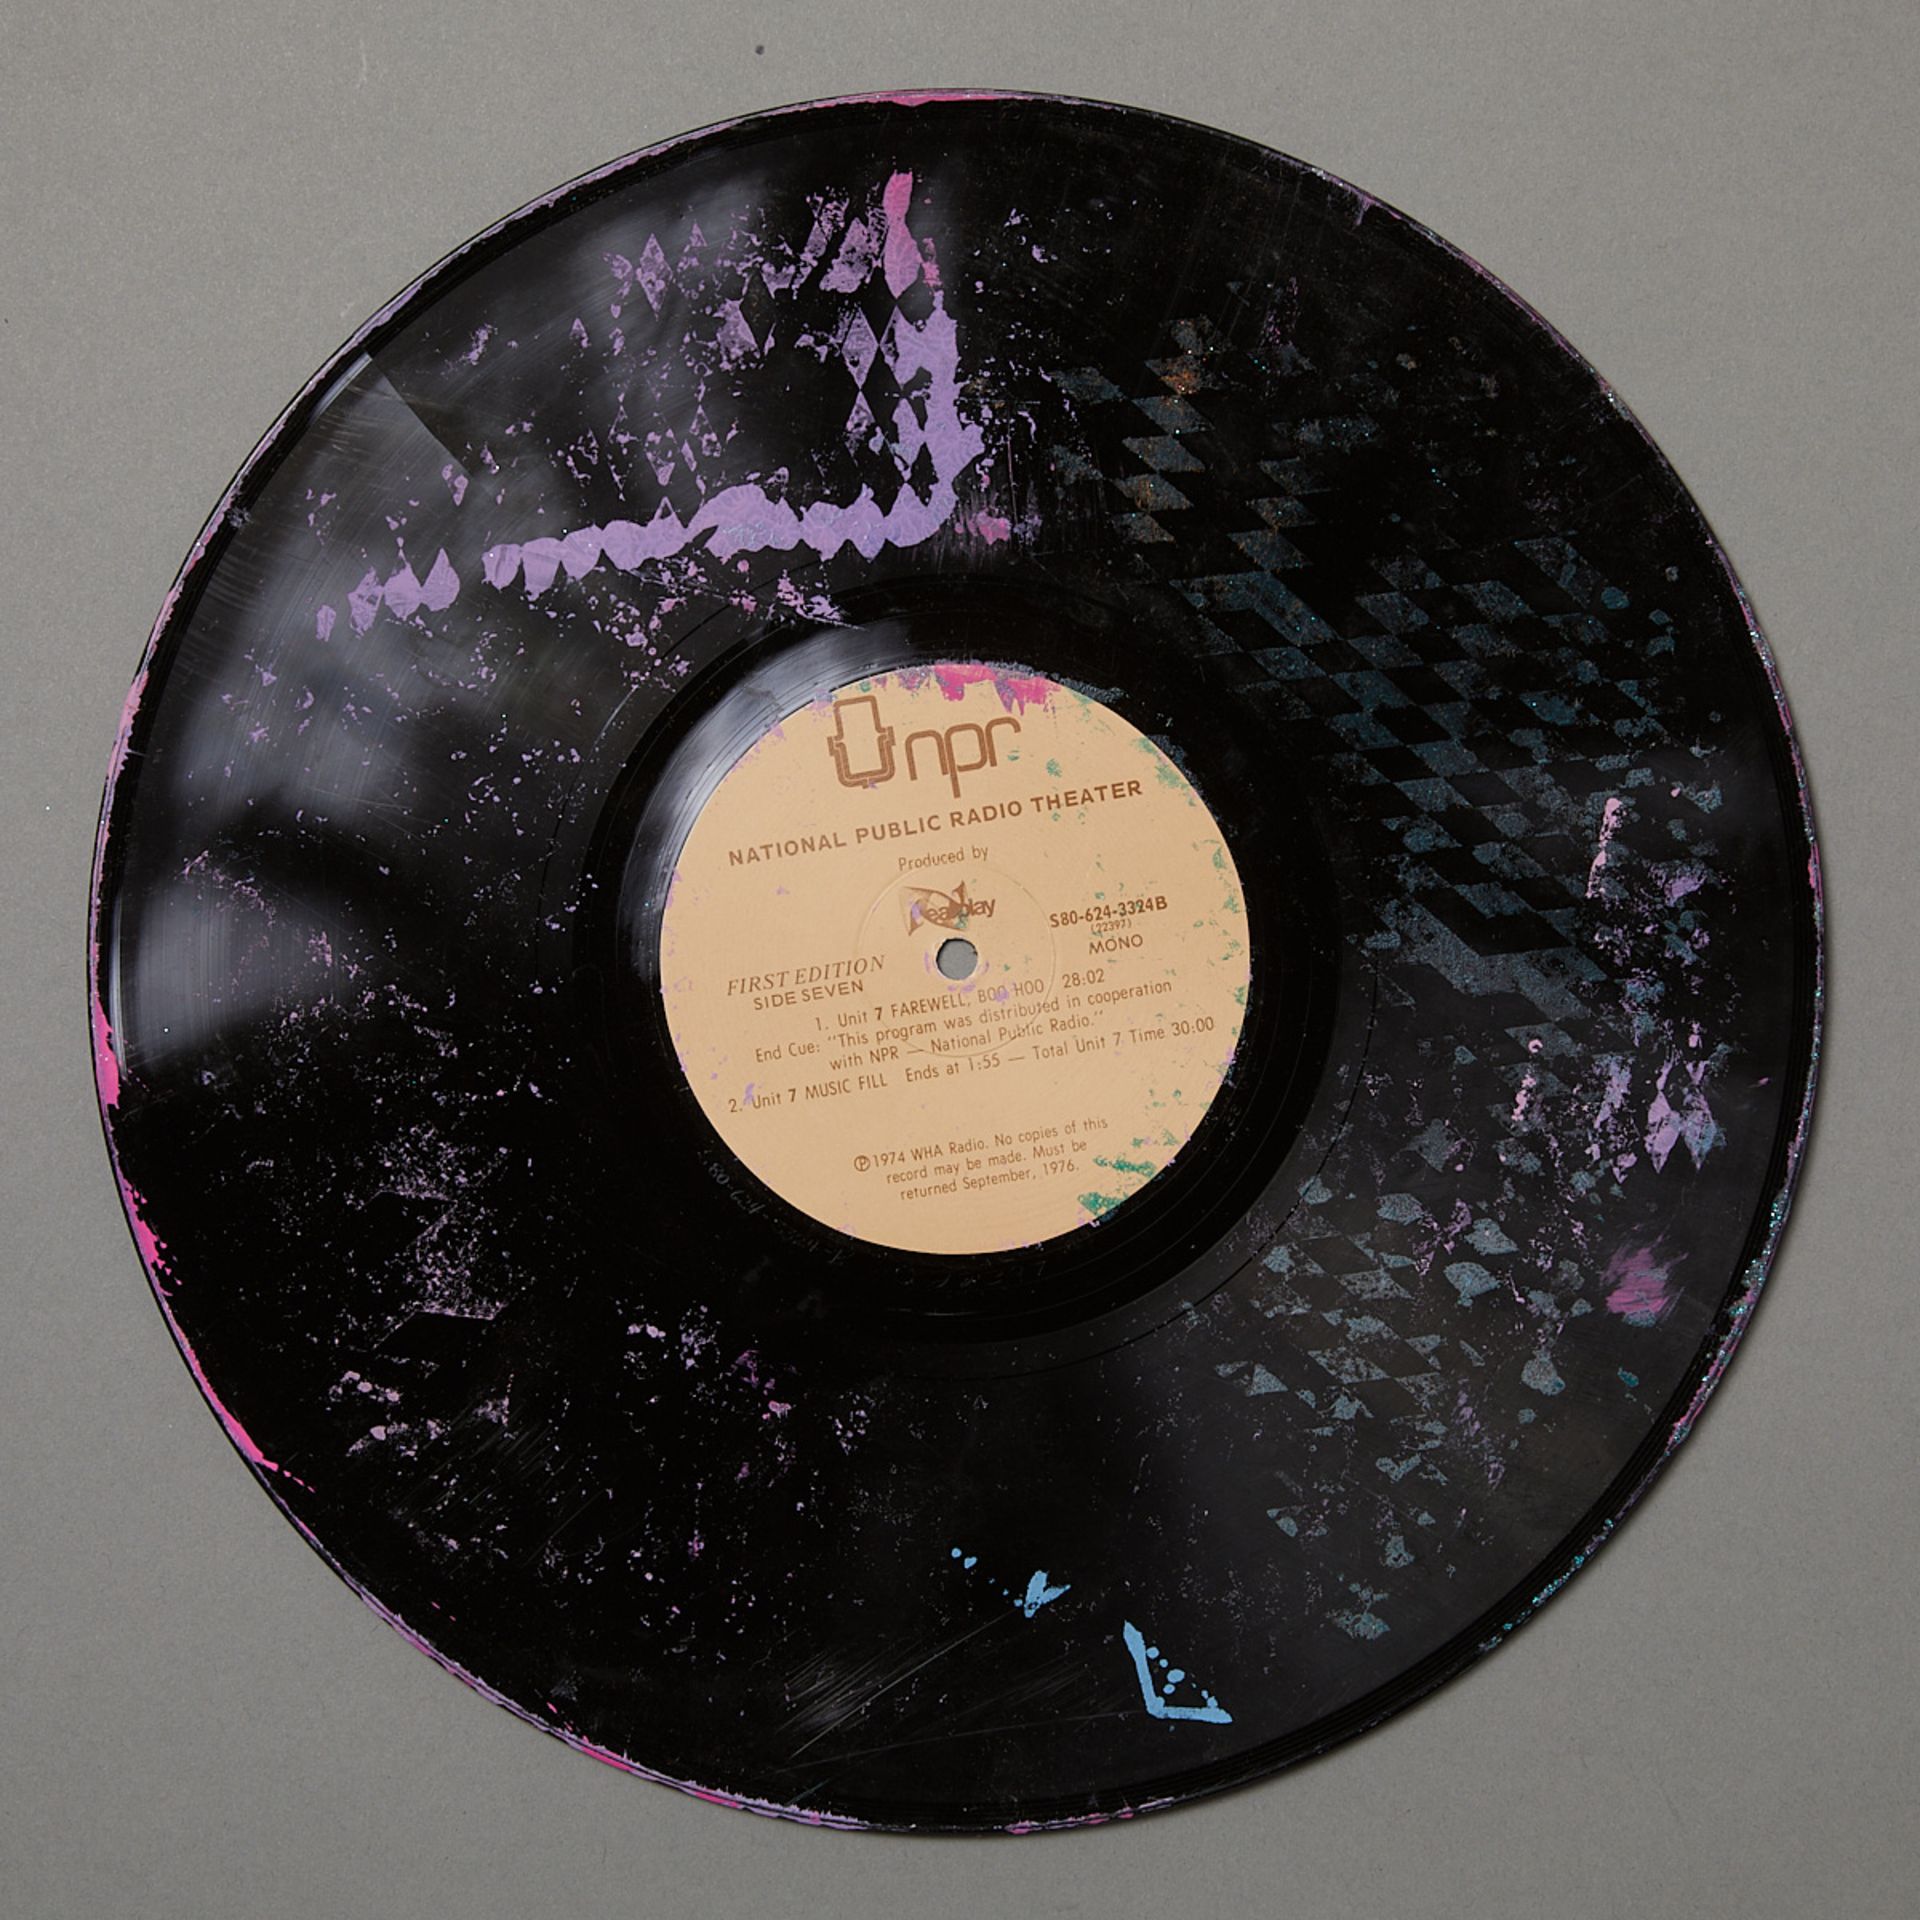 William Weege Mixed Media on Vinyl Record 1976 - Image 4 of 8